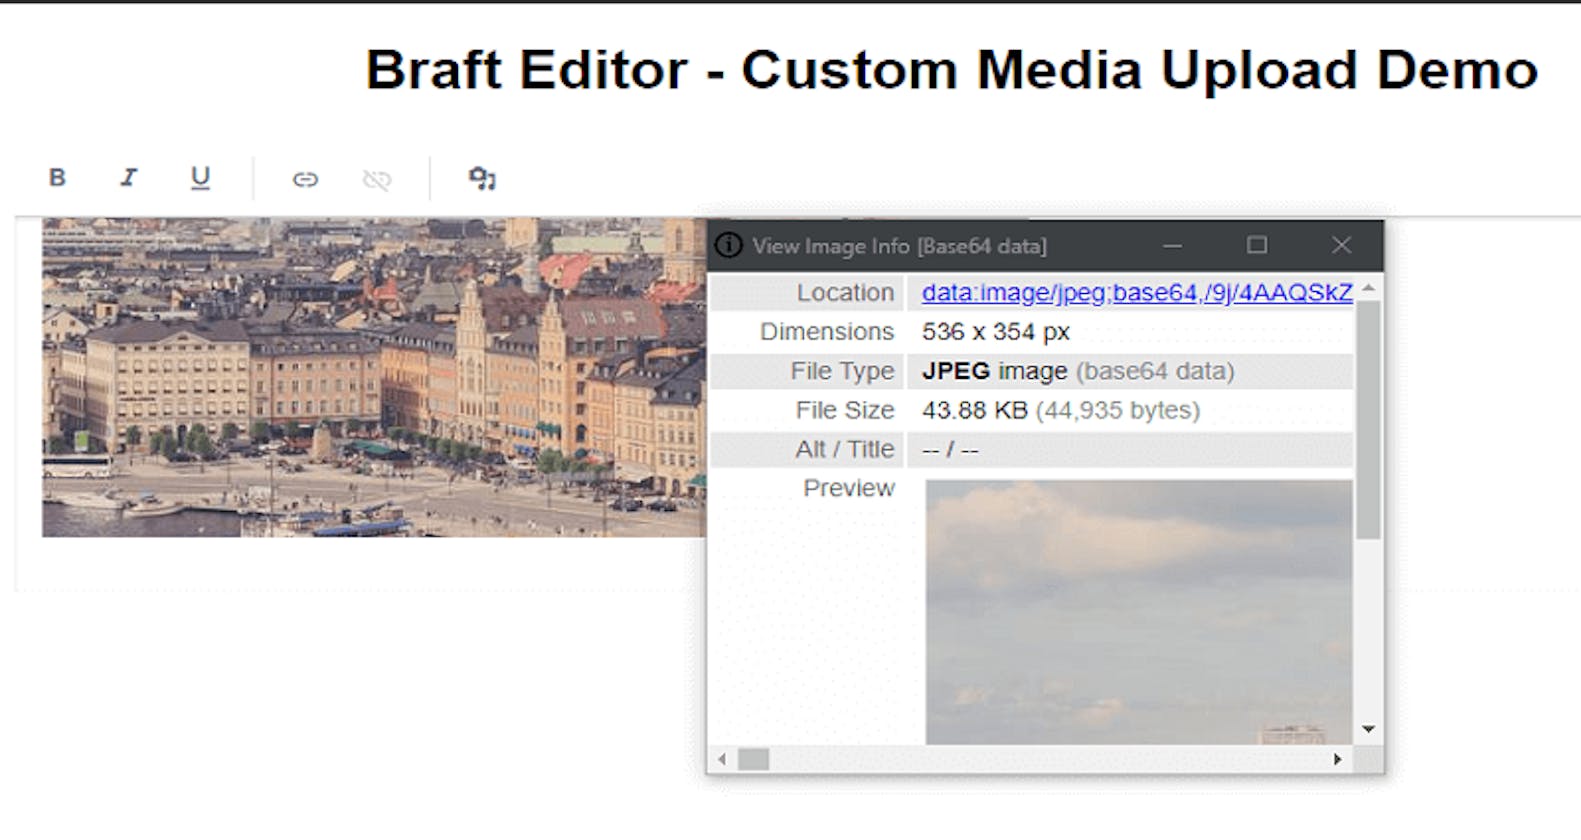 Braft Editor - Custom Media Upload and Validation